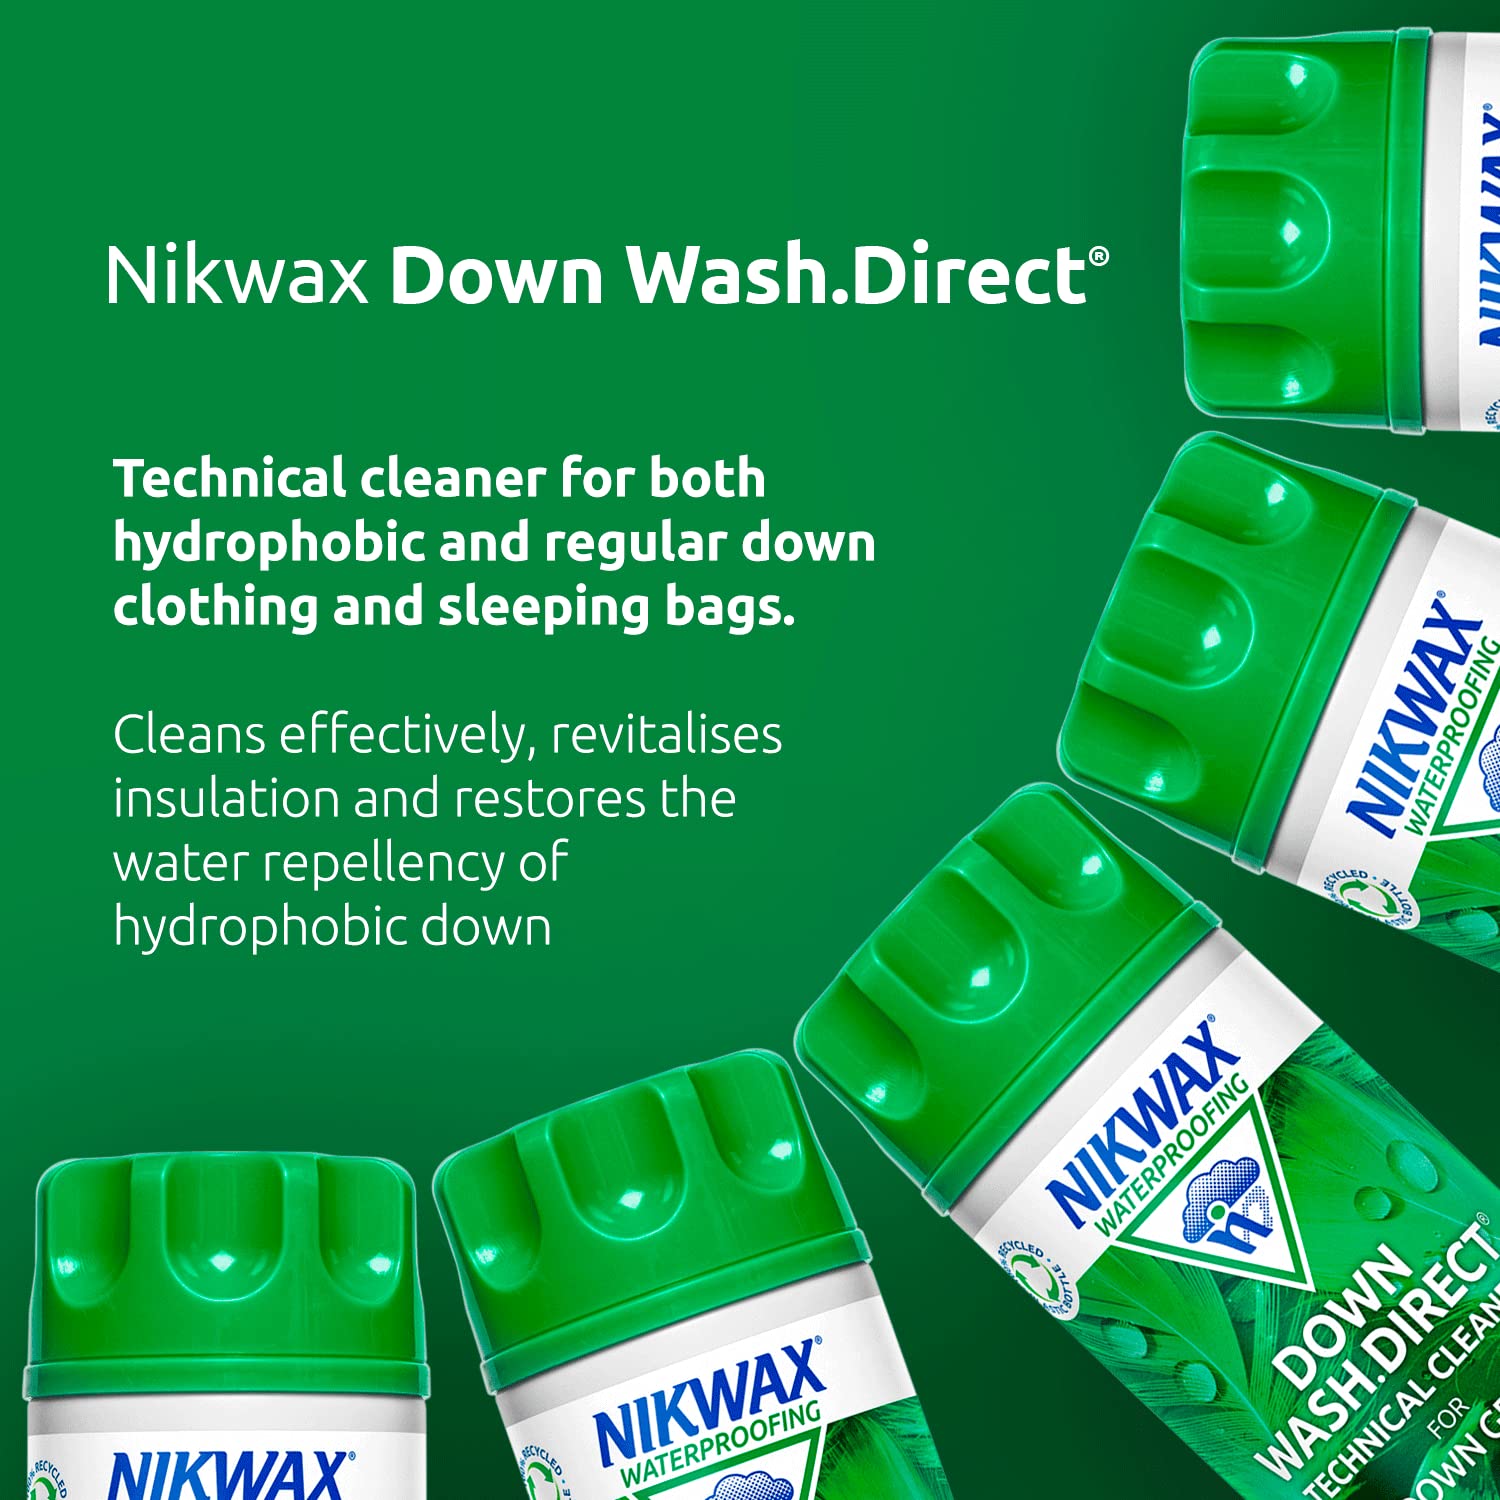 Nikwax Down Wash Direct Waschmittel